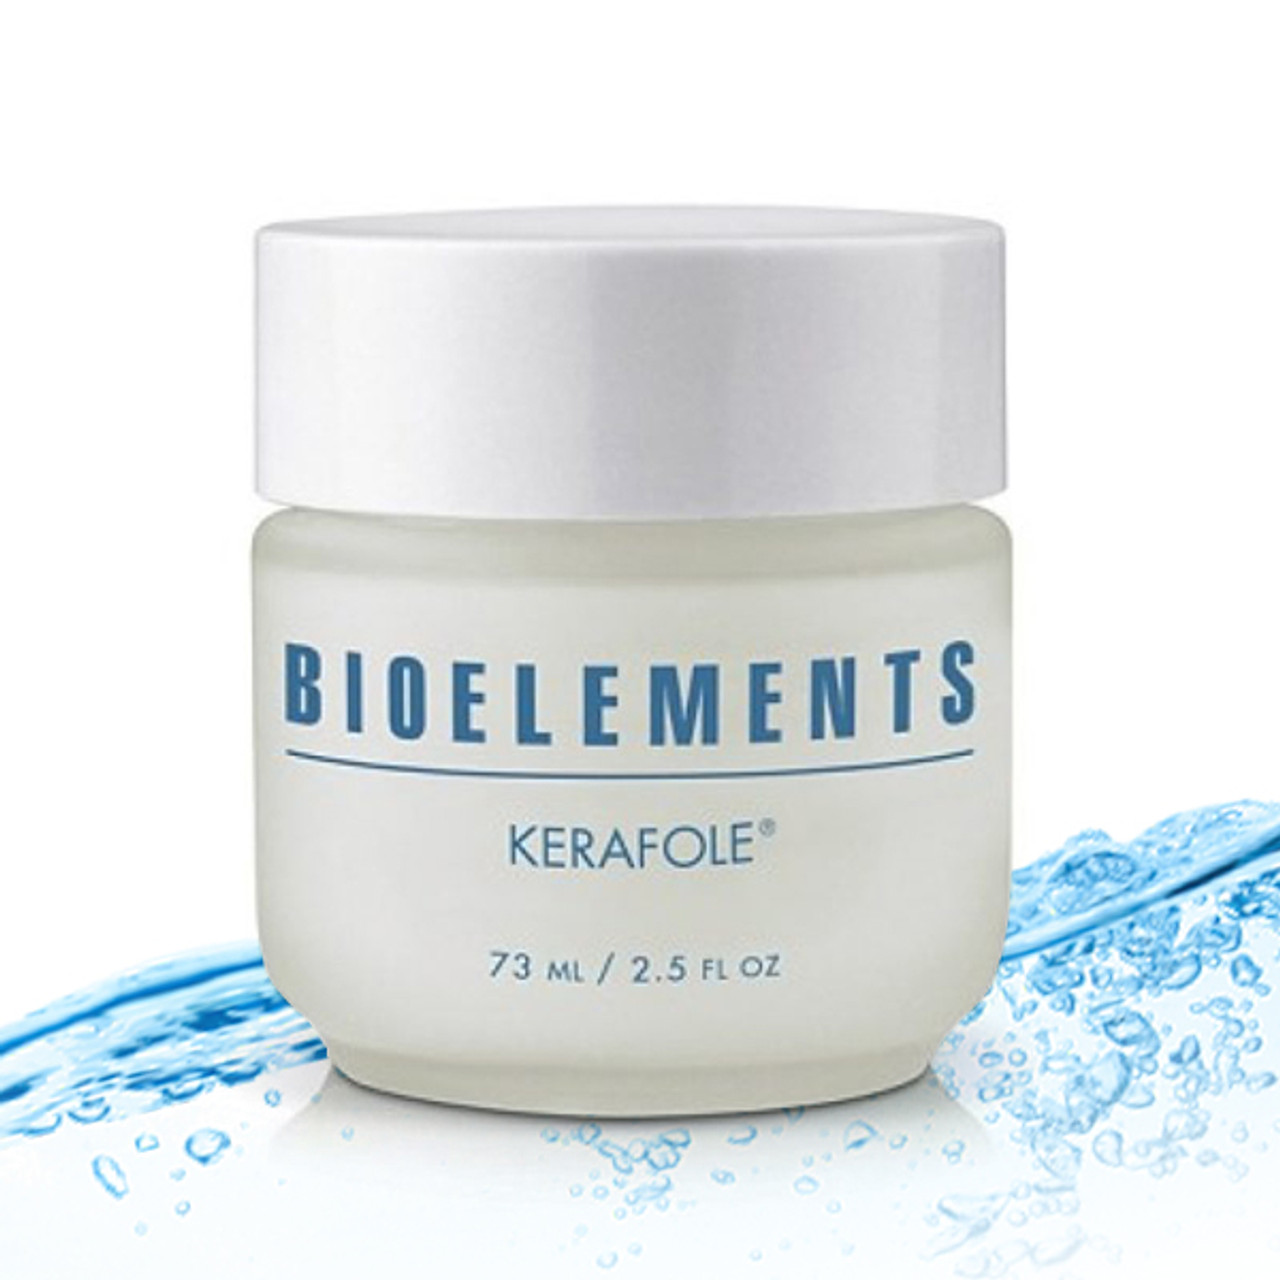 Bioelements Kerafole - 2.5 oz